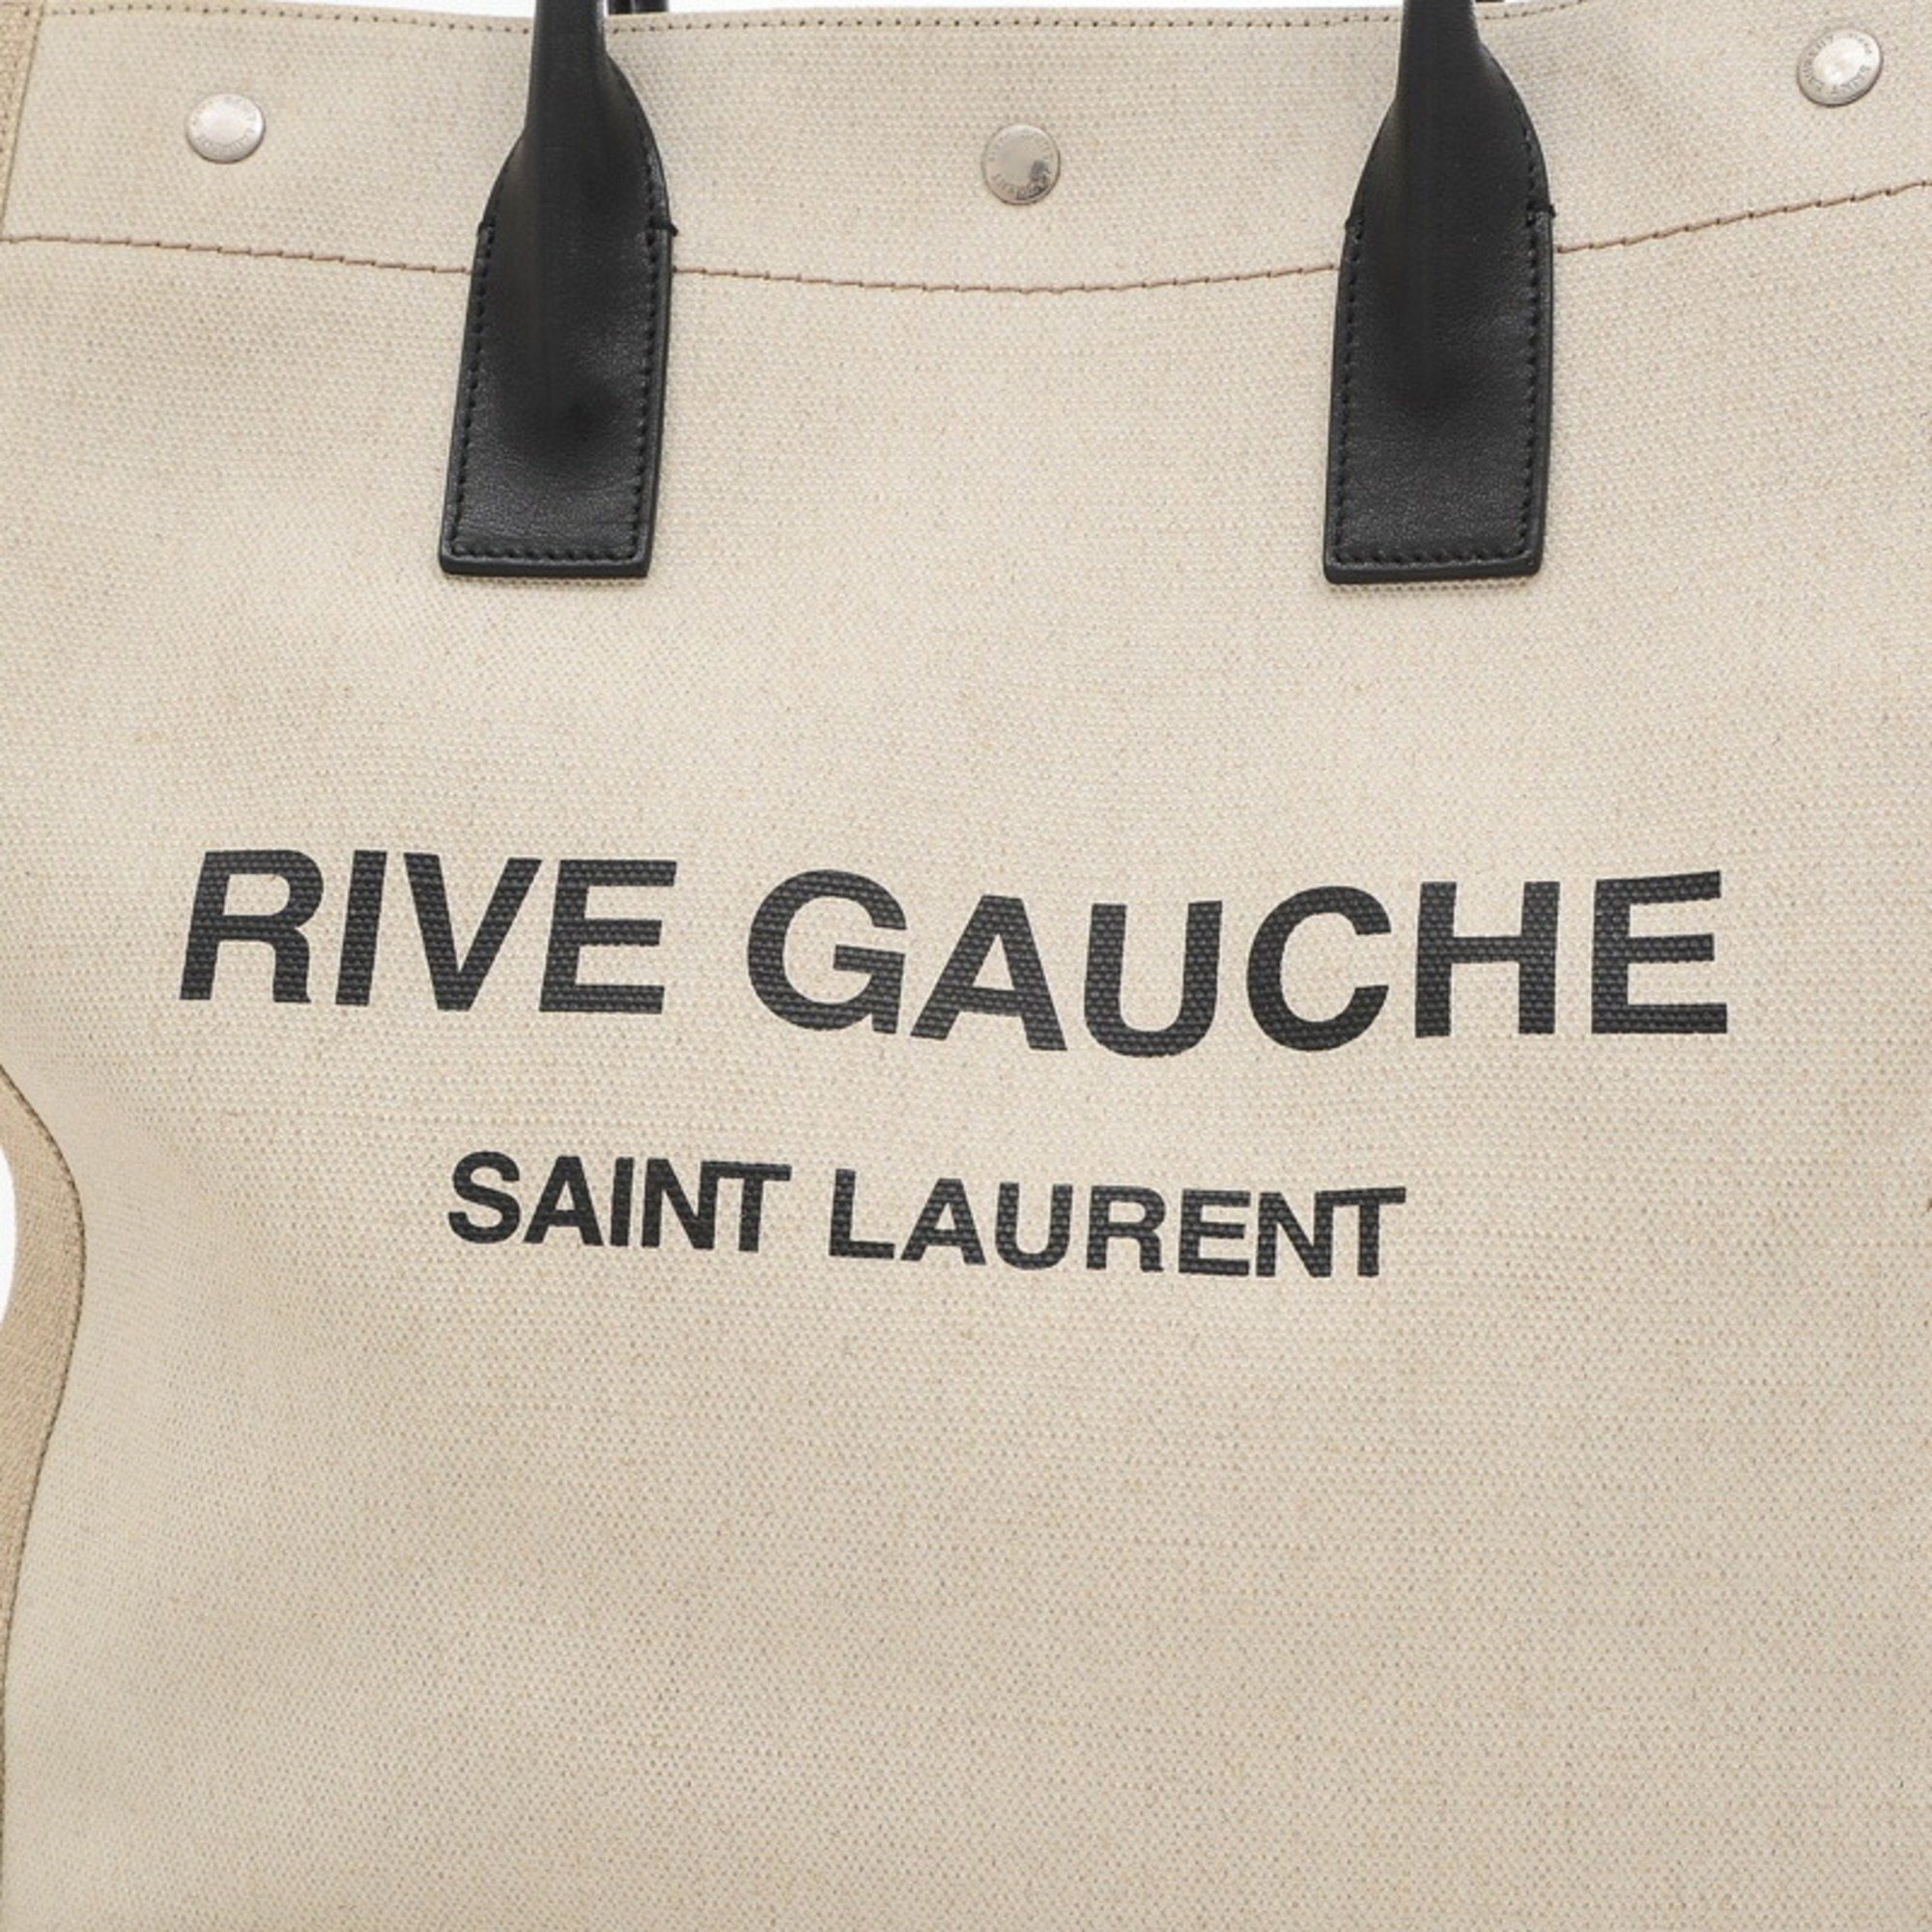 Saint Laurent Noe N S Rive Gauche Tote Bag Canvas White Linen Black 631682